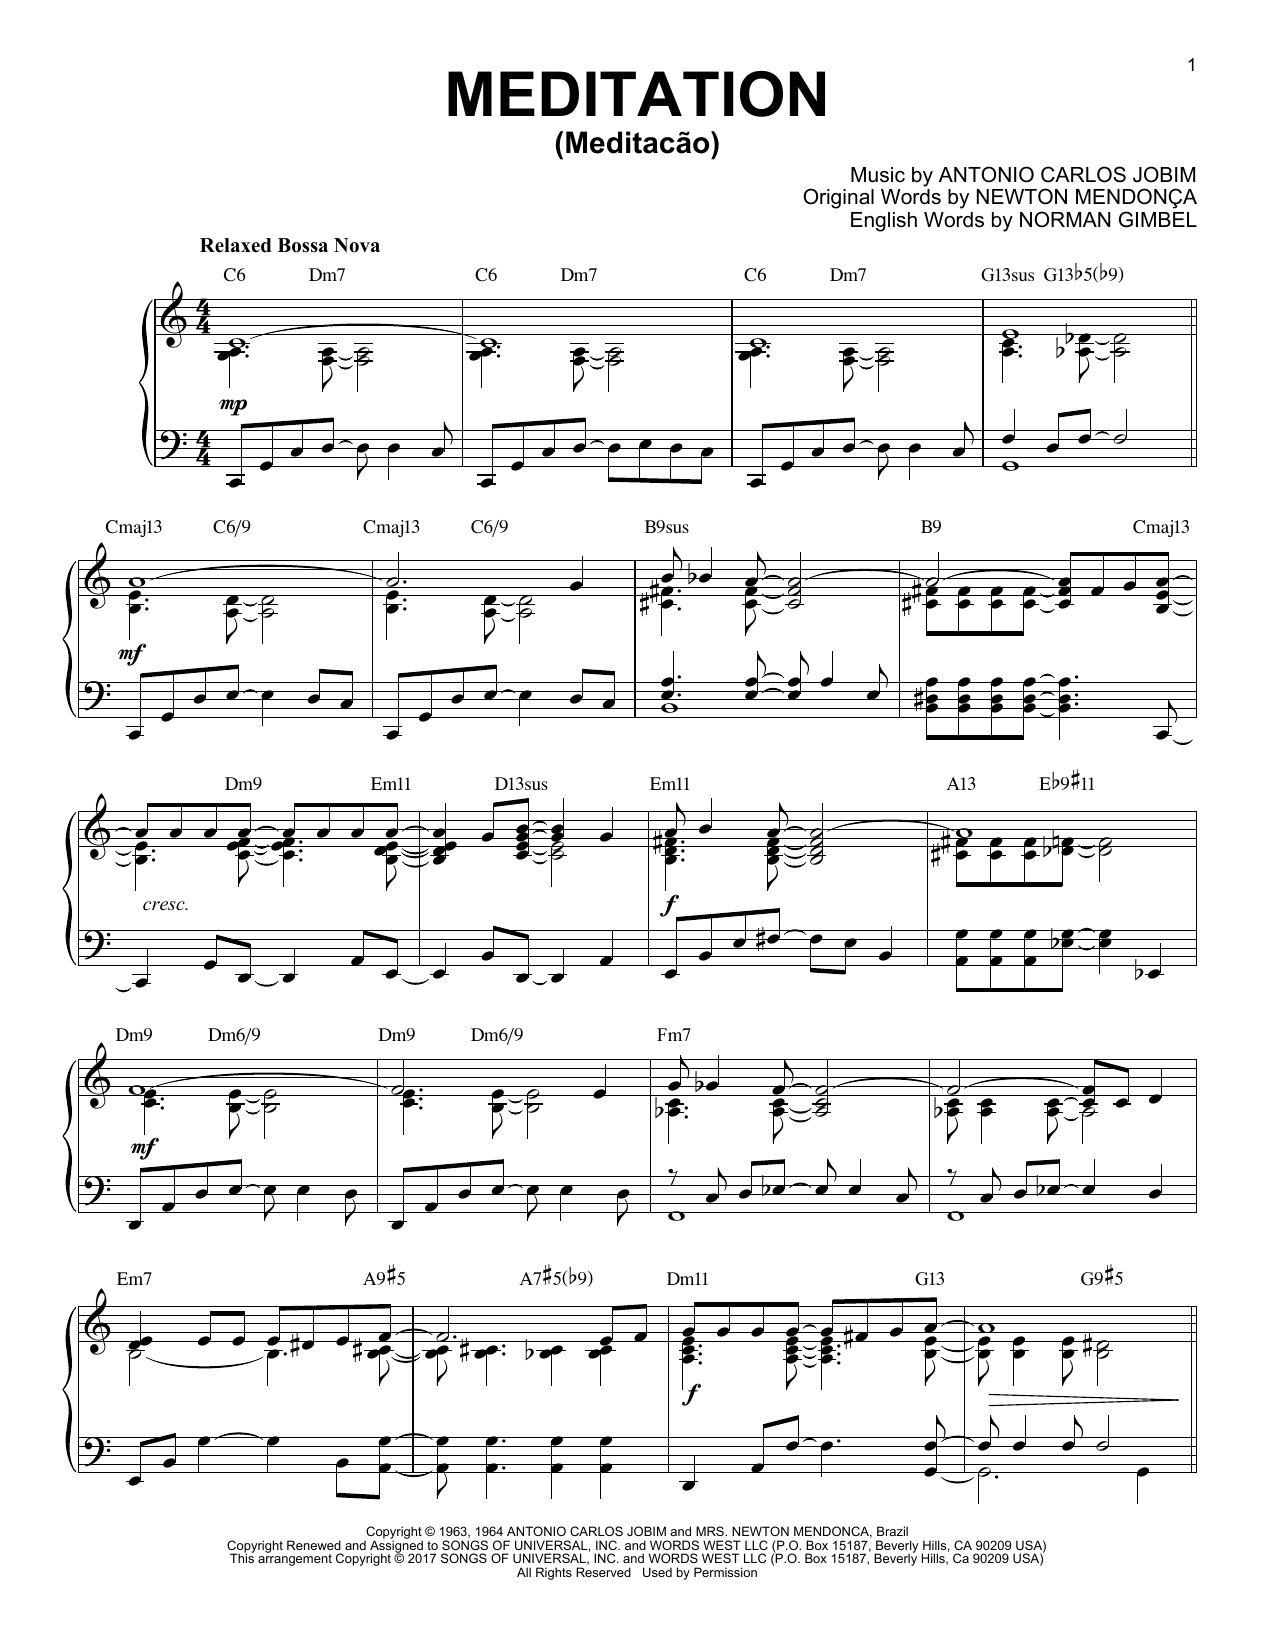 Antonio Carlos Jobim Meditation (Meditacao) [Jazz version] Sheet Music Notes & Chords for Piano - Download or Print PDF